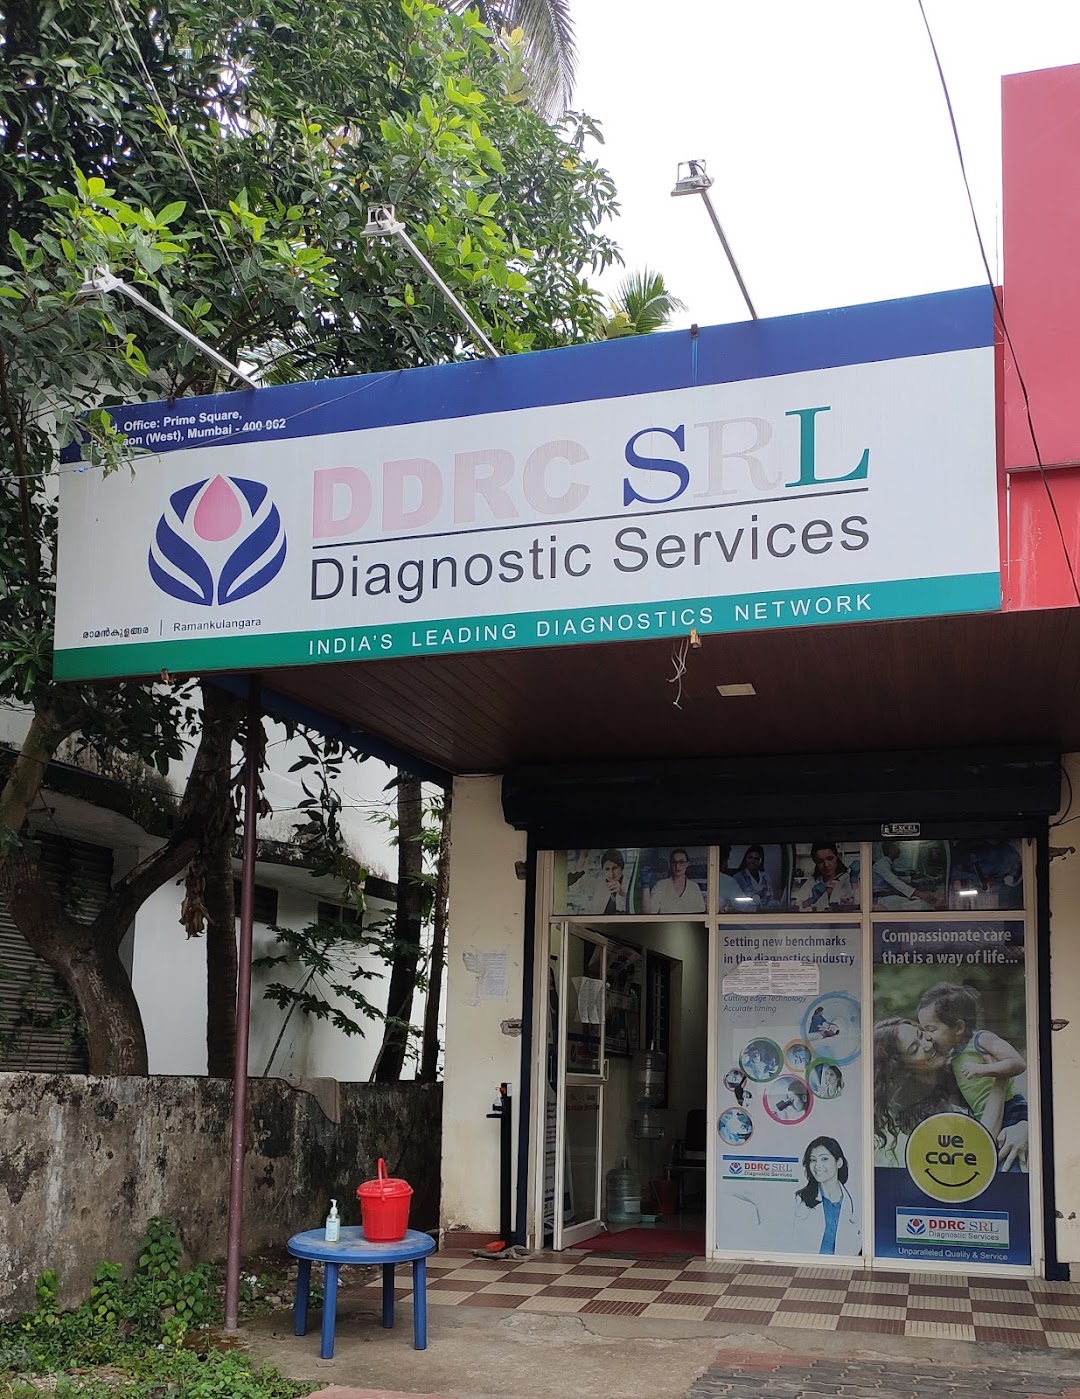 DDRC SRL Diagnostics Pvt Ltd